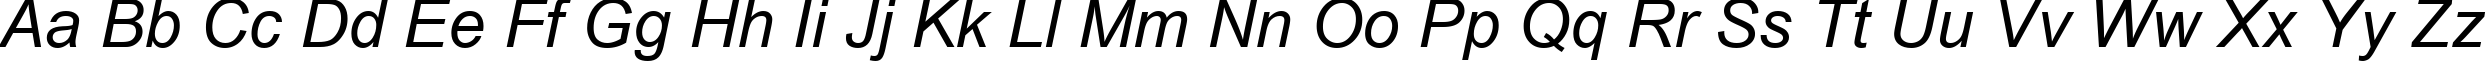 Пример написания английского алфавита шрифтом Arial Cyr Italic